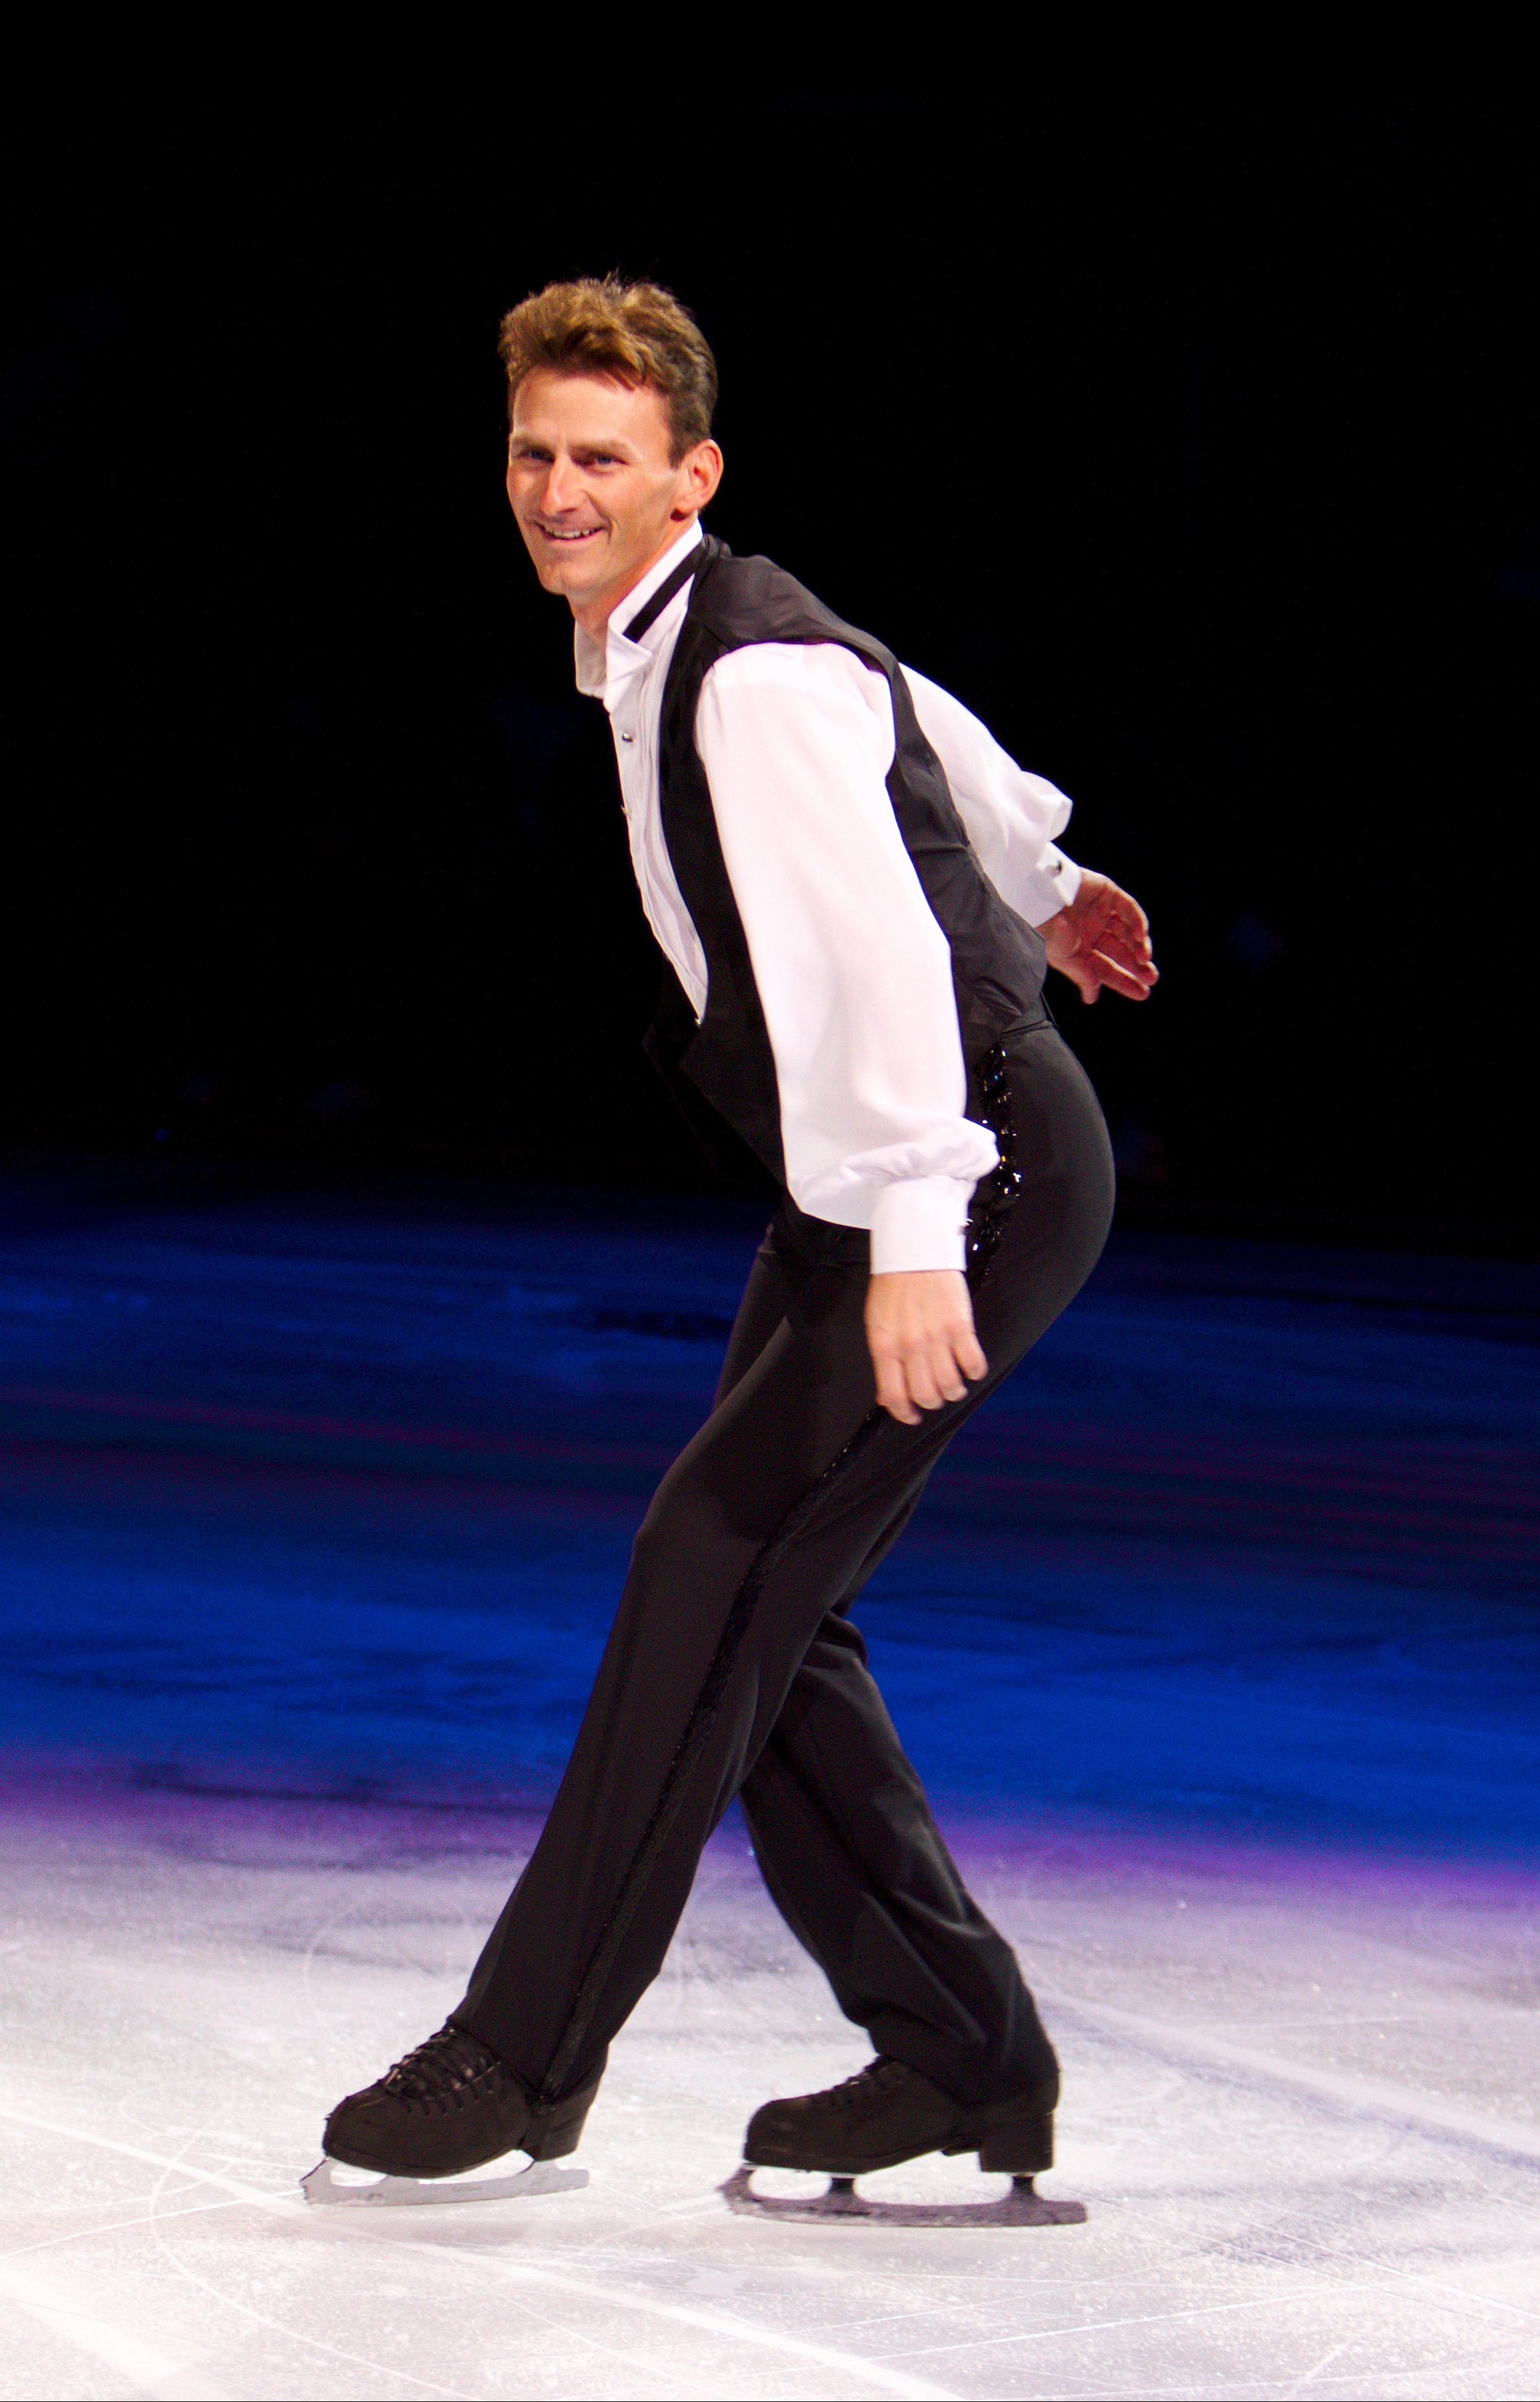 Todd Eldredge, World Champion Figure Skater